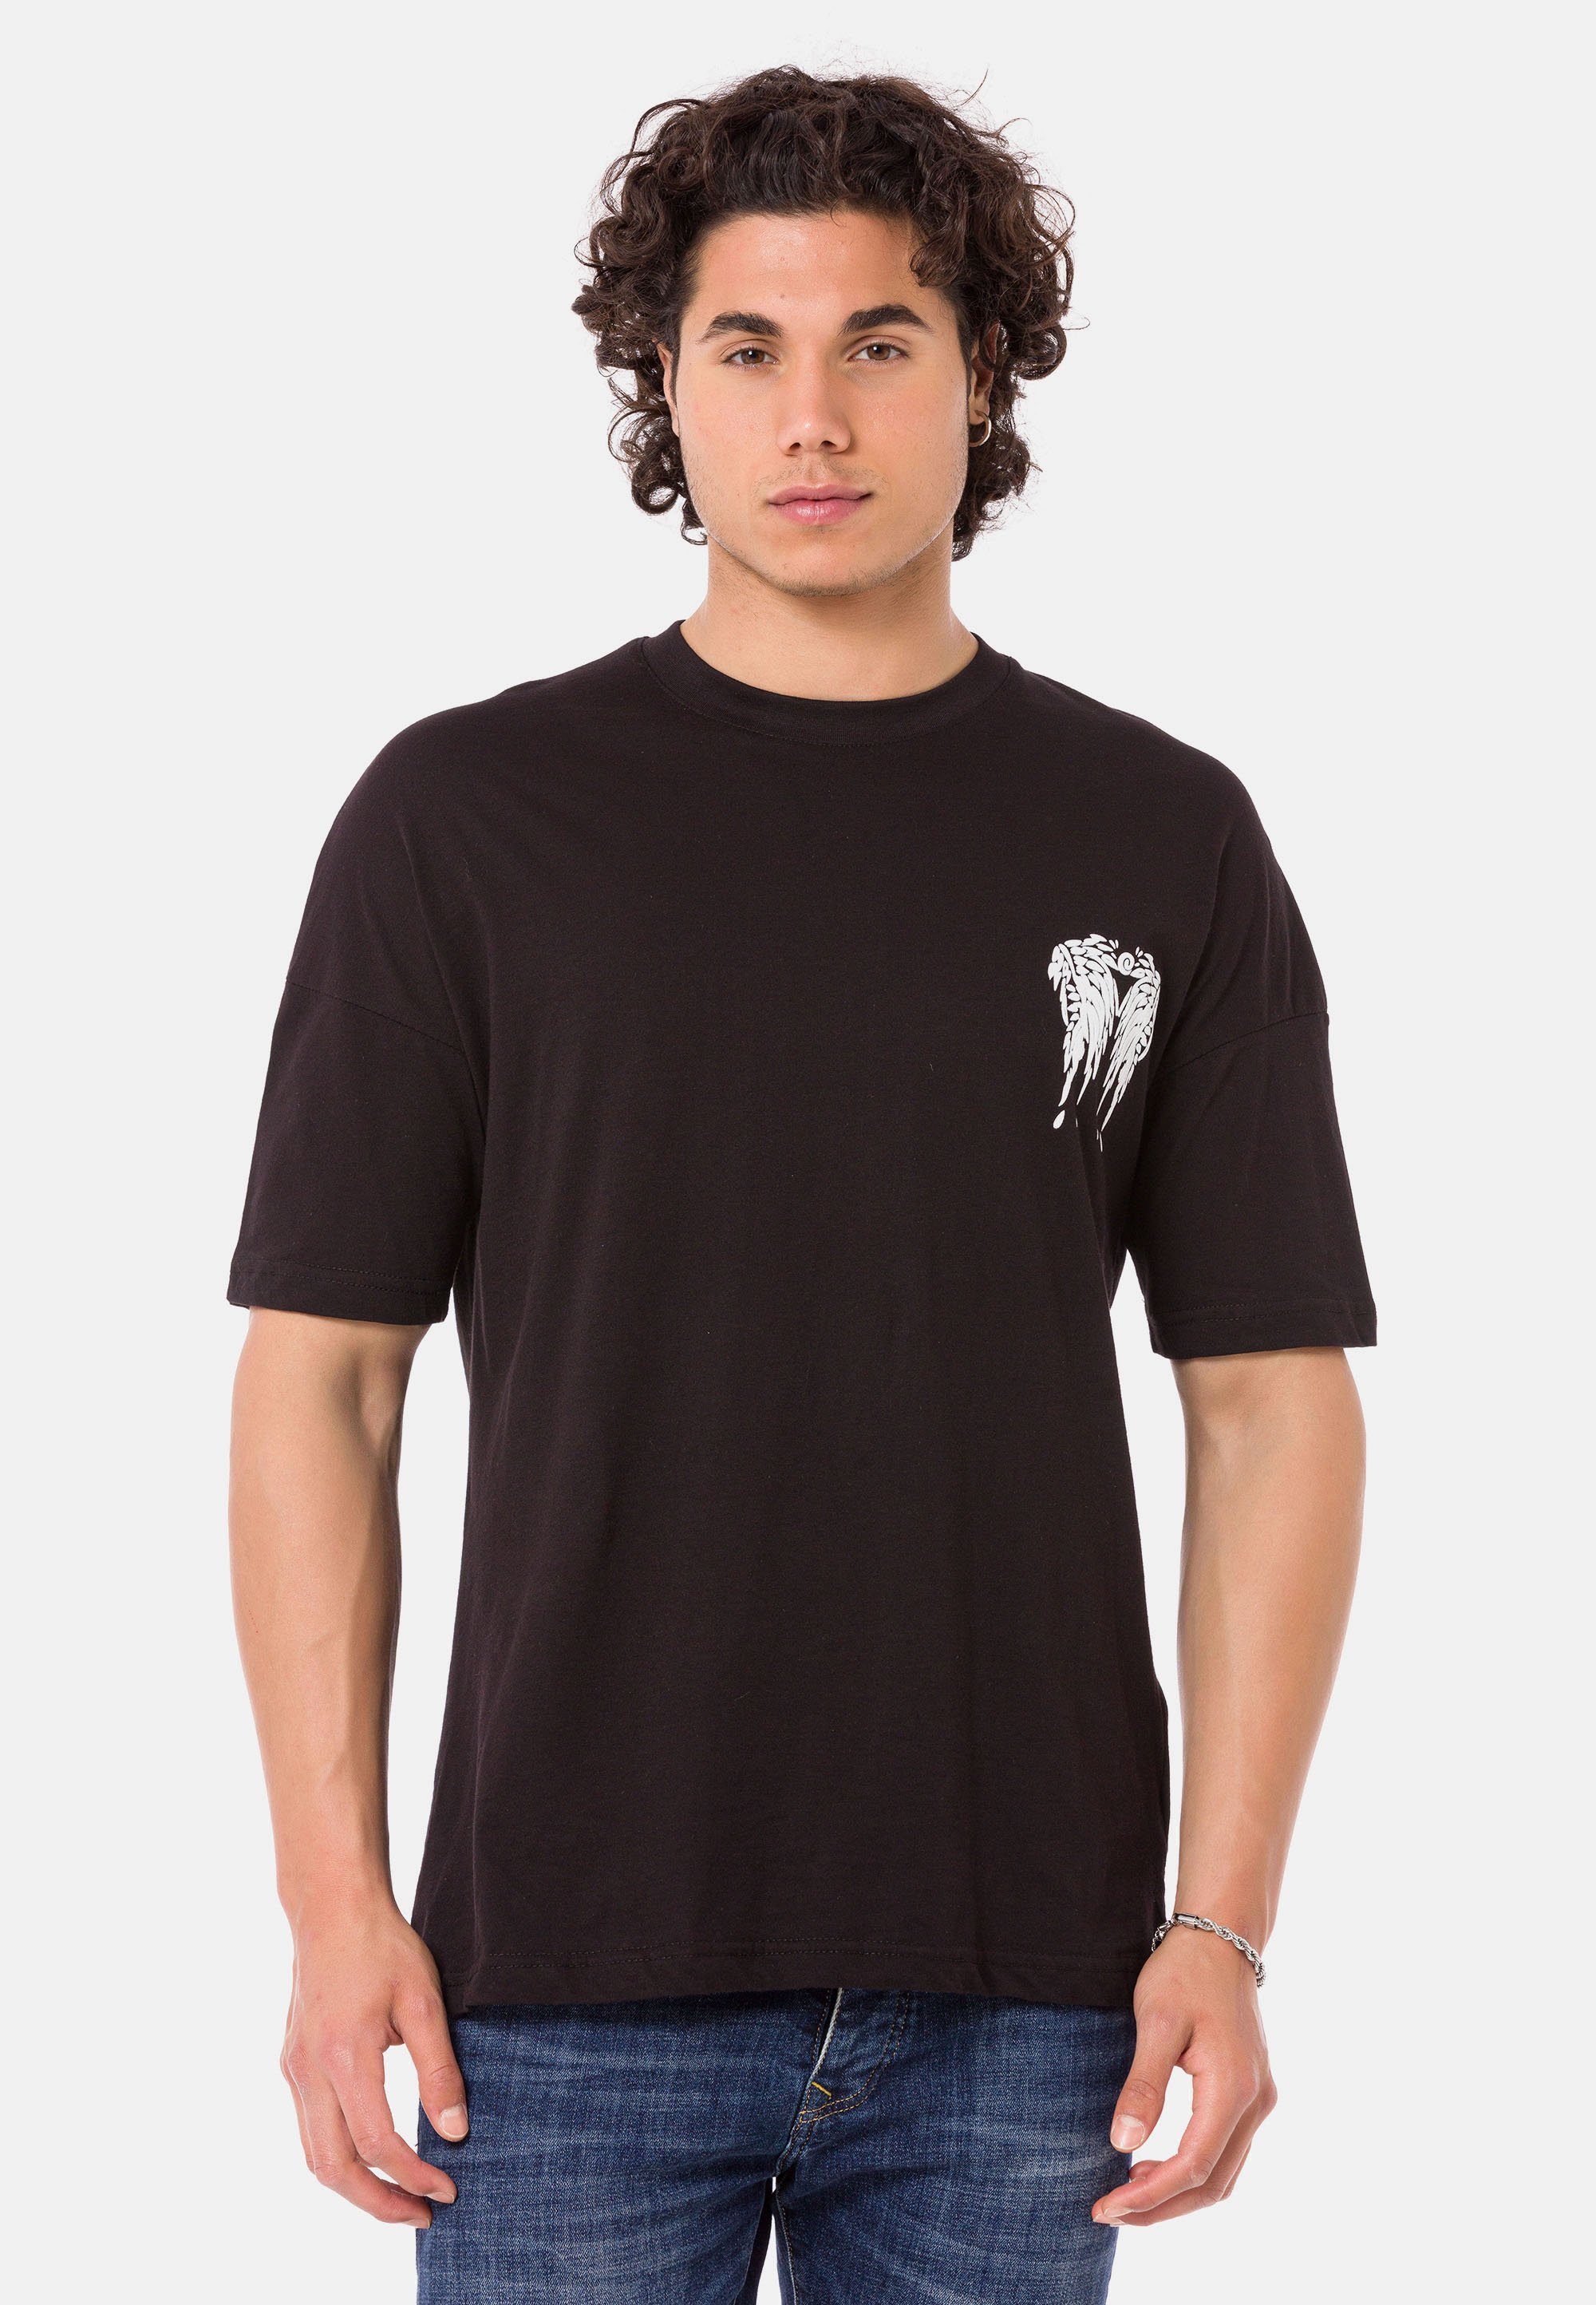 RedBridge T-Shirt Corby mit großflächigem Print schwarz